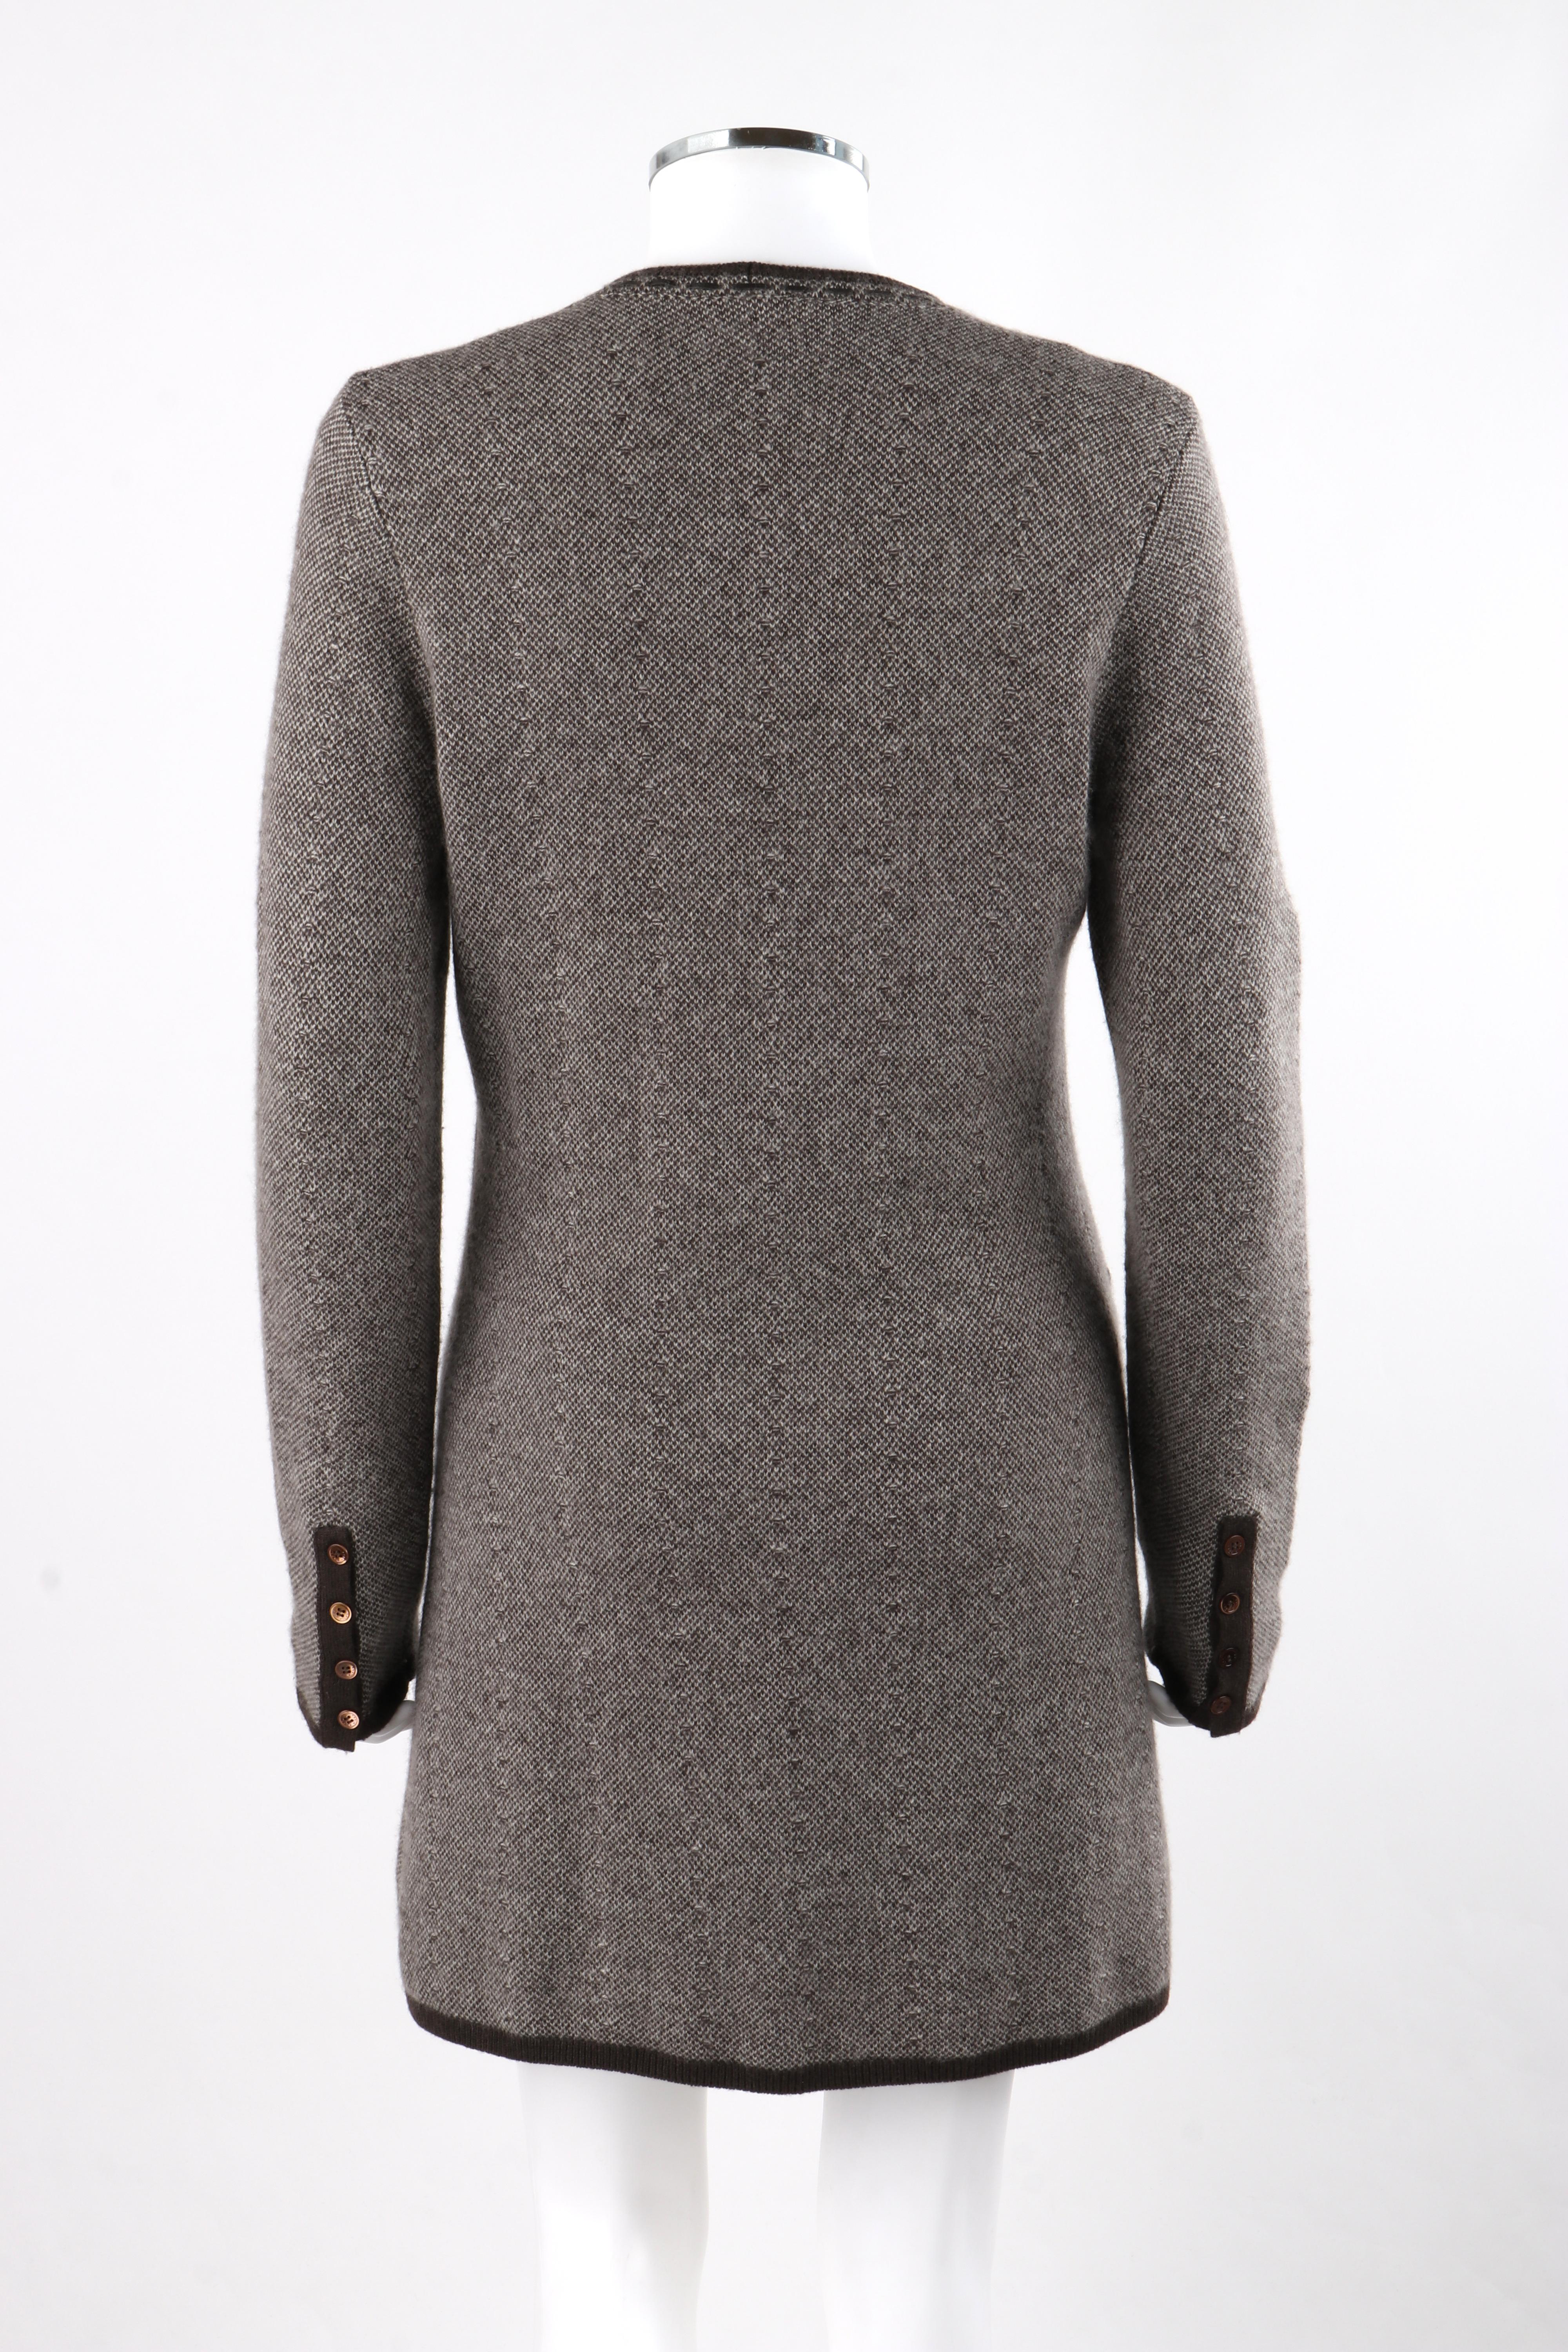 Women's LORO PIANA Brown Cashmere Leather Tweed Knit Cardigan Dress Sweater Twin Set 44